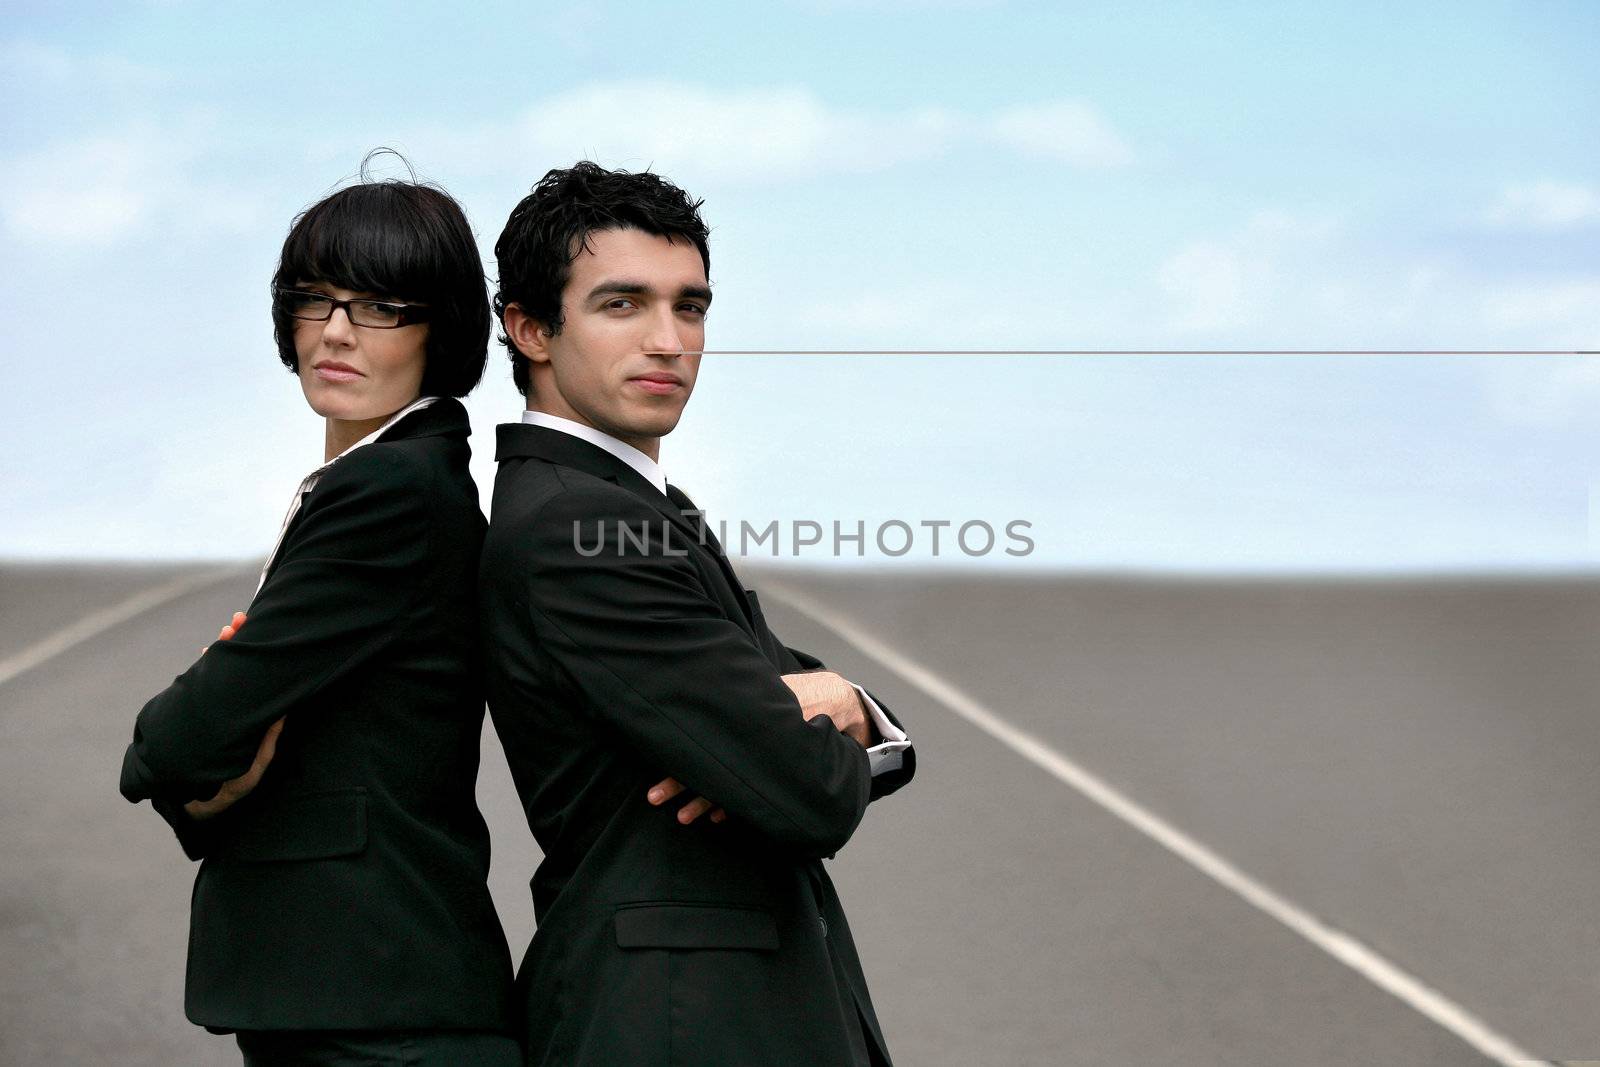 Two businesspeople stood on runway